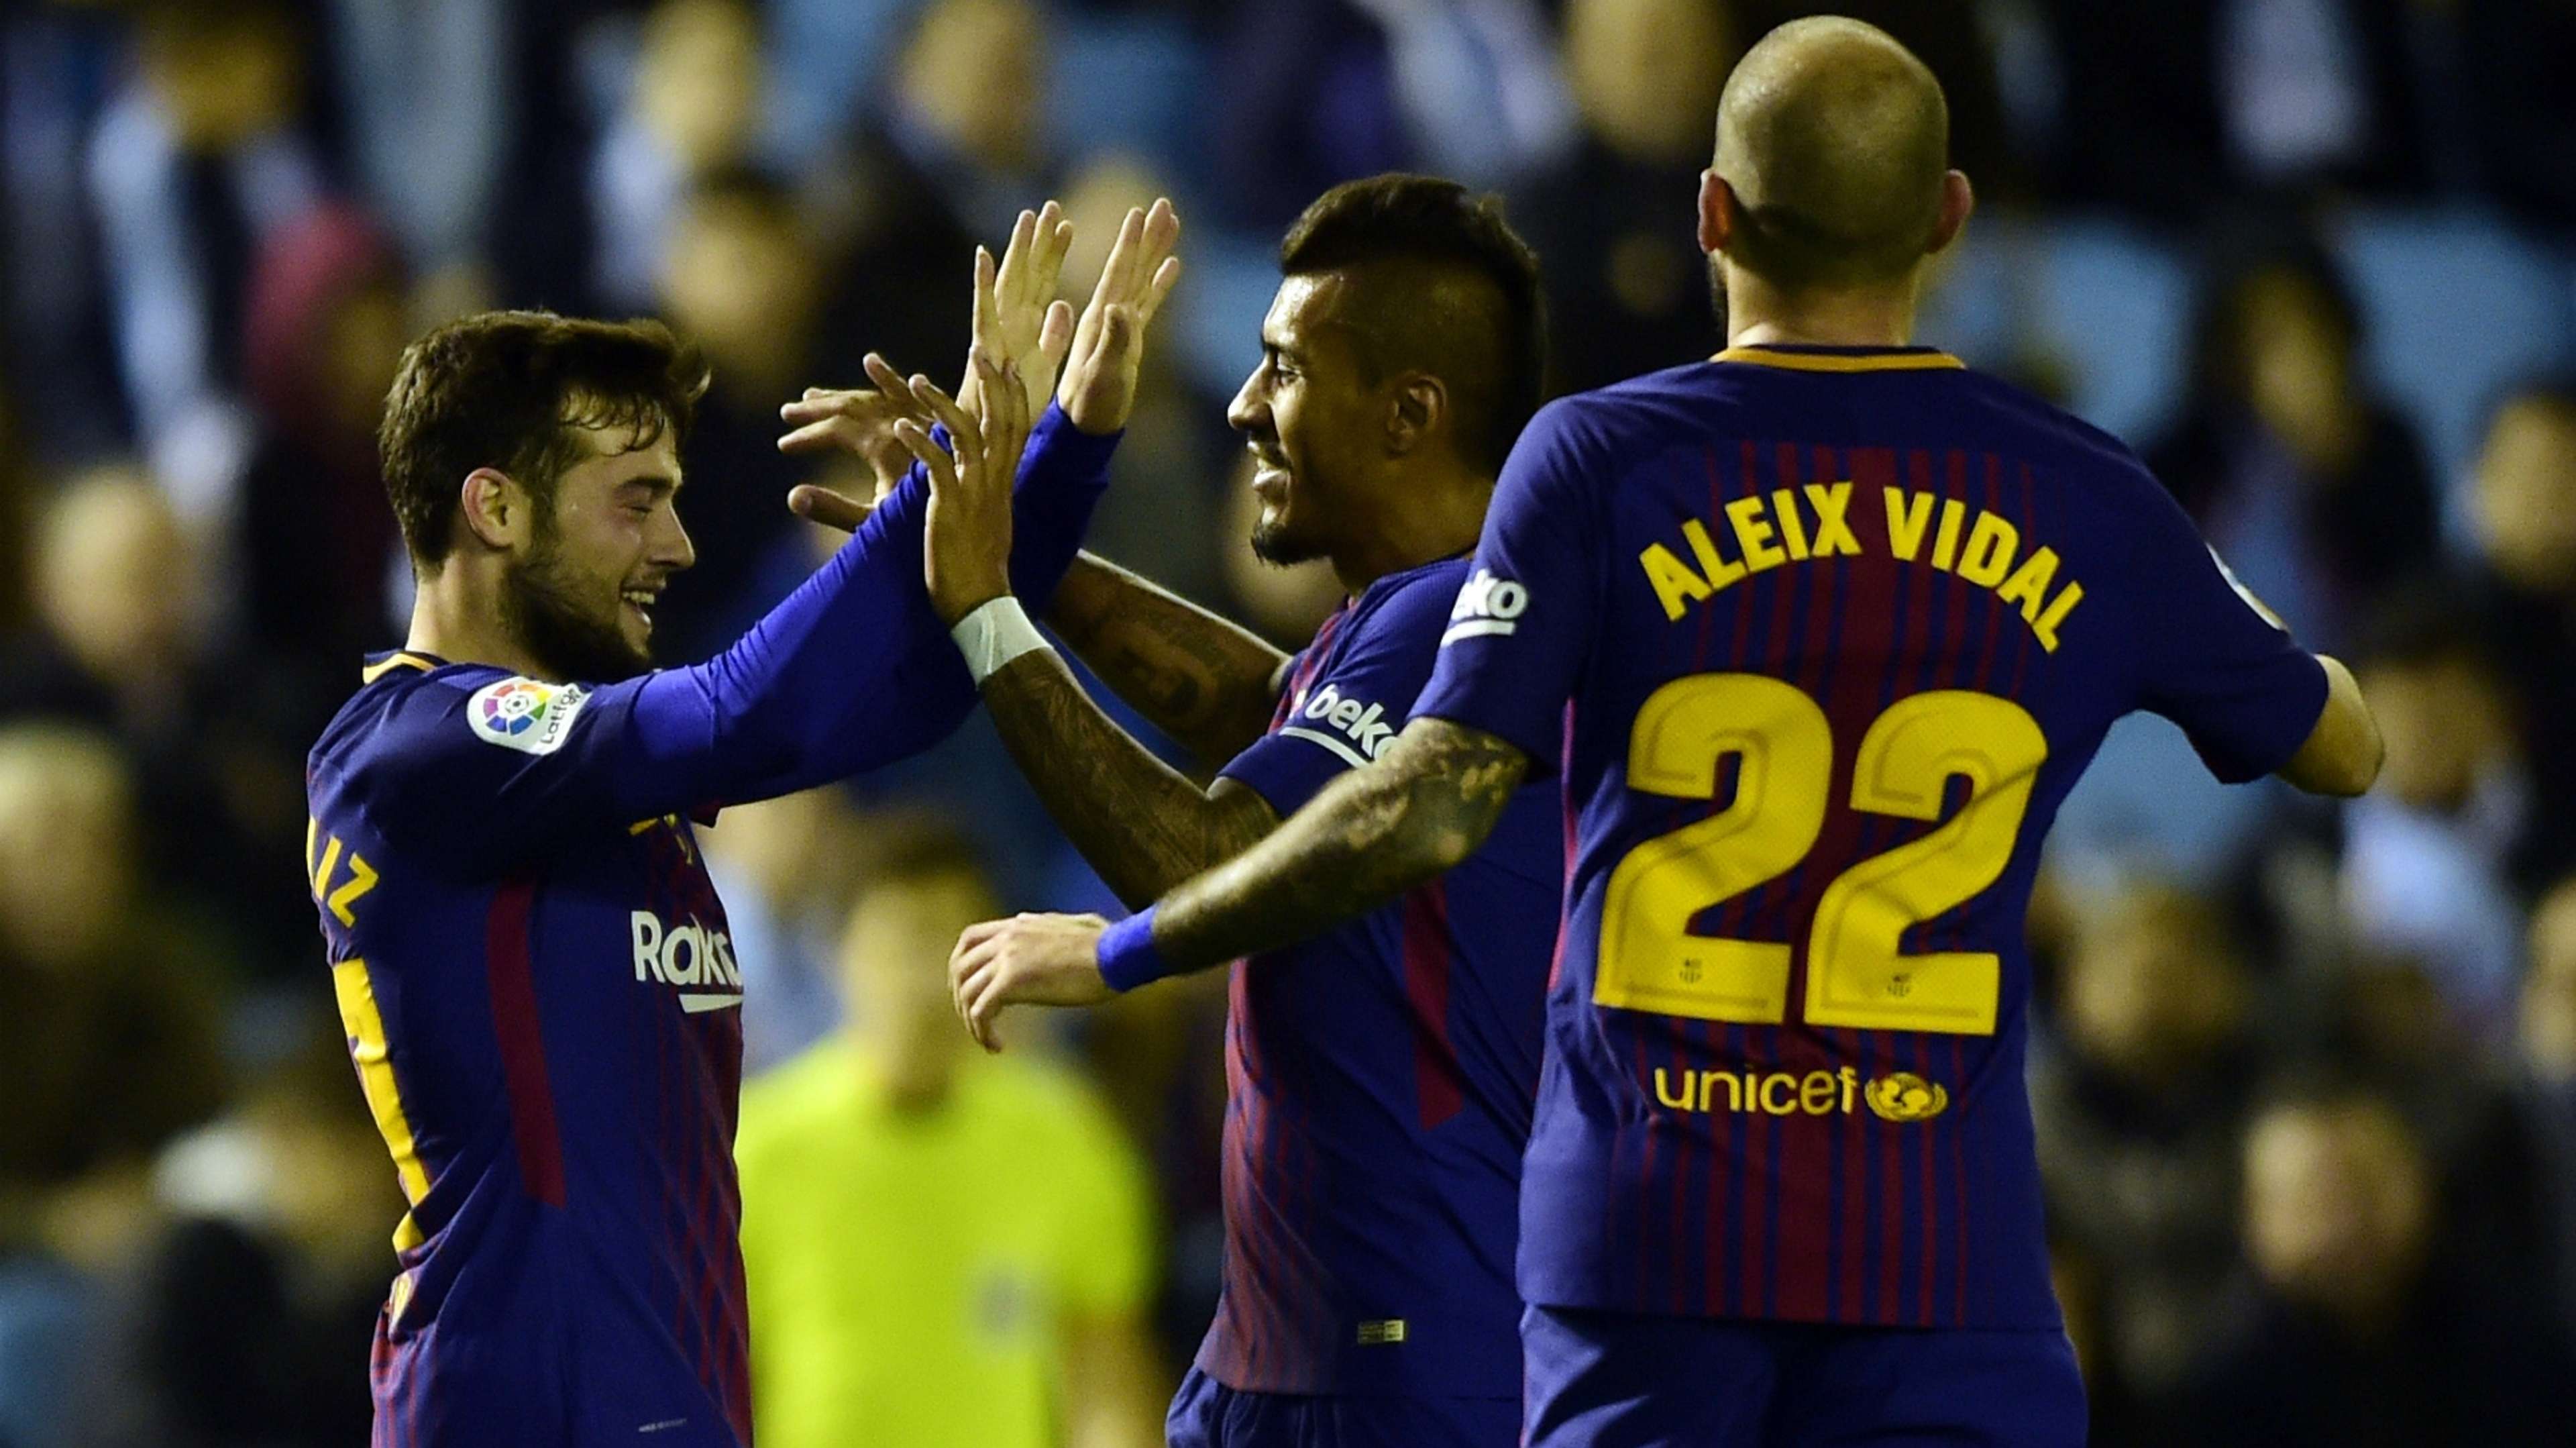 Jose Arnaiz Aleix Vidal Barcelona Celta Vigo